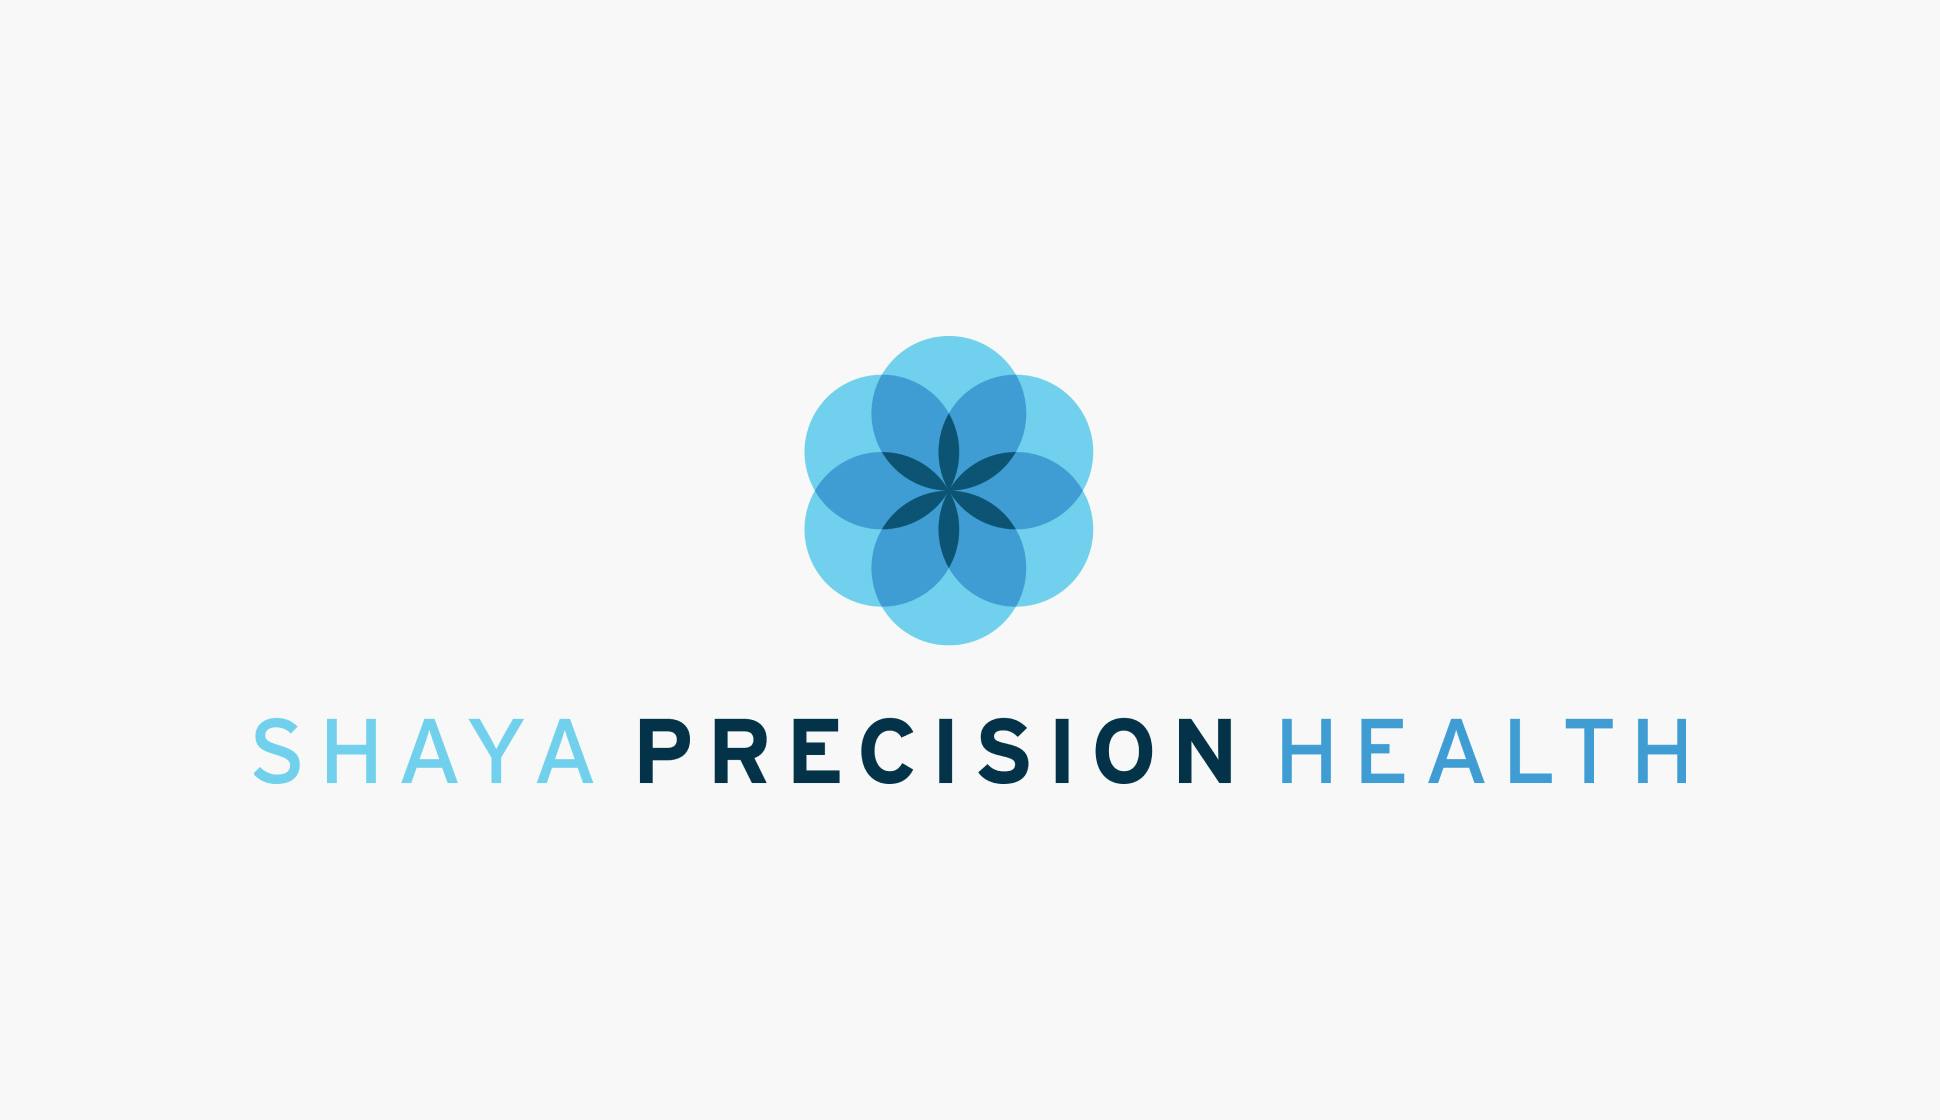 Logo of Dr. Shaya Precision Health